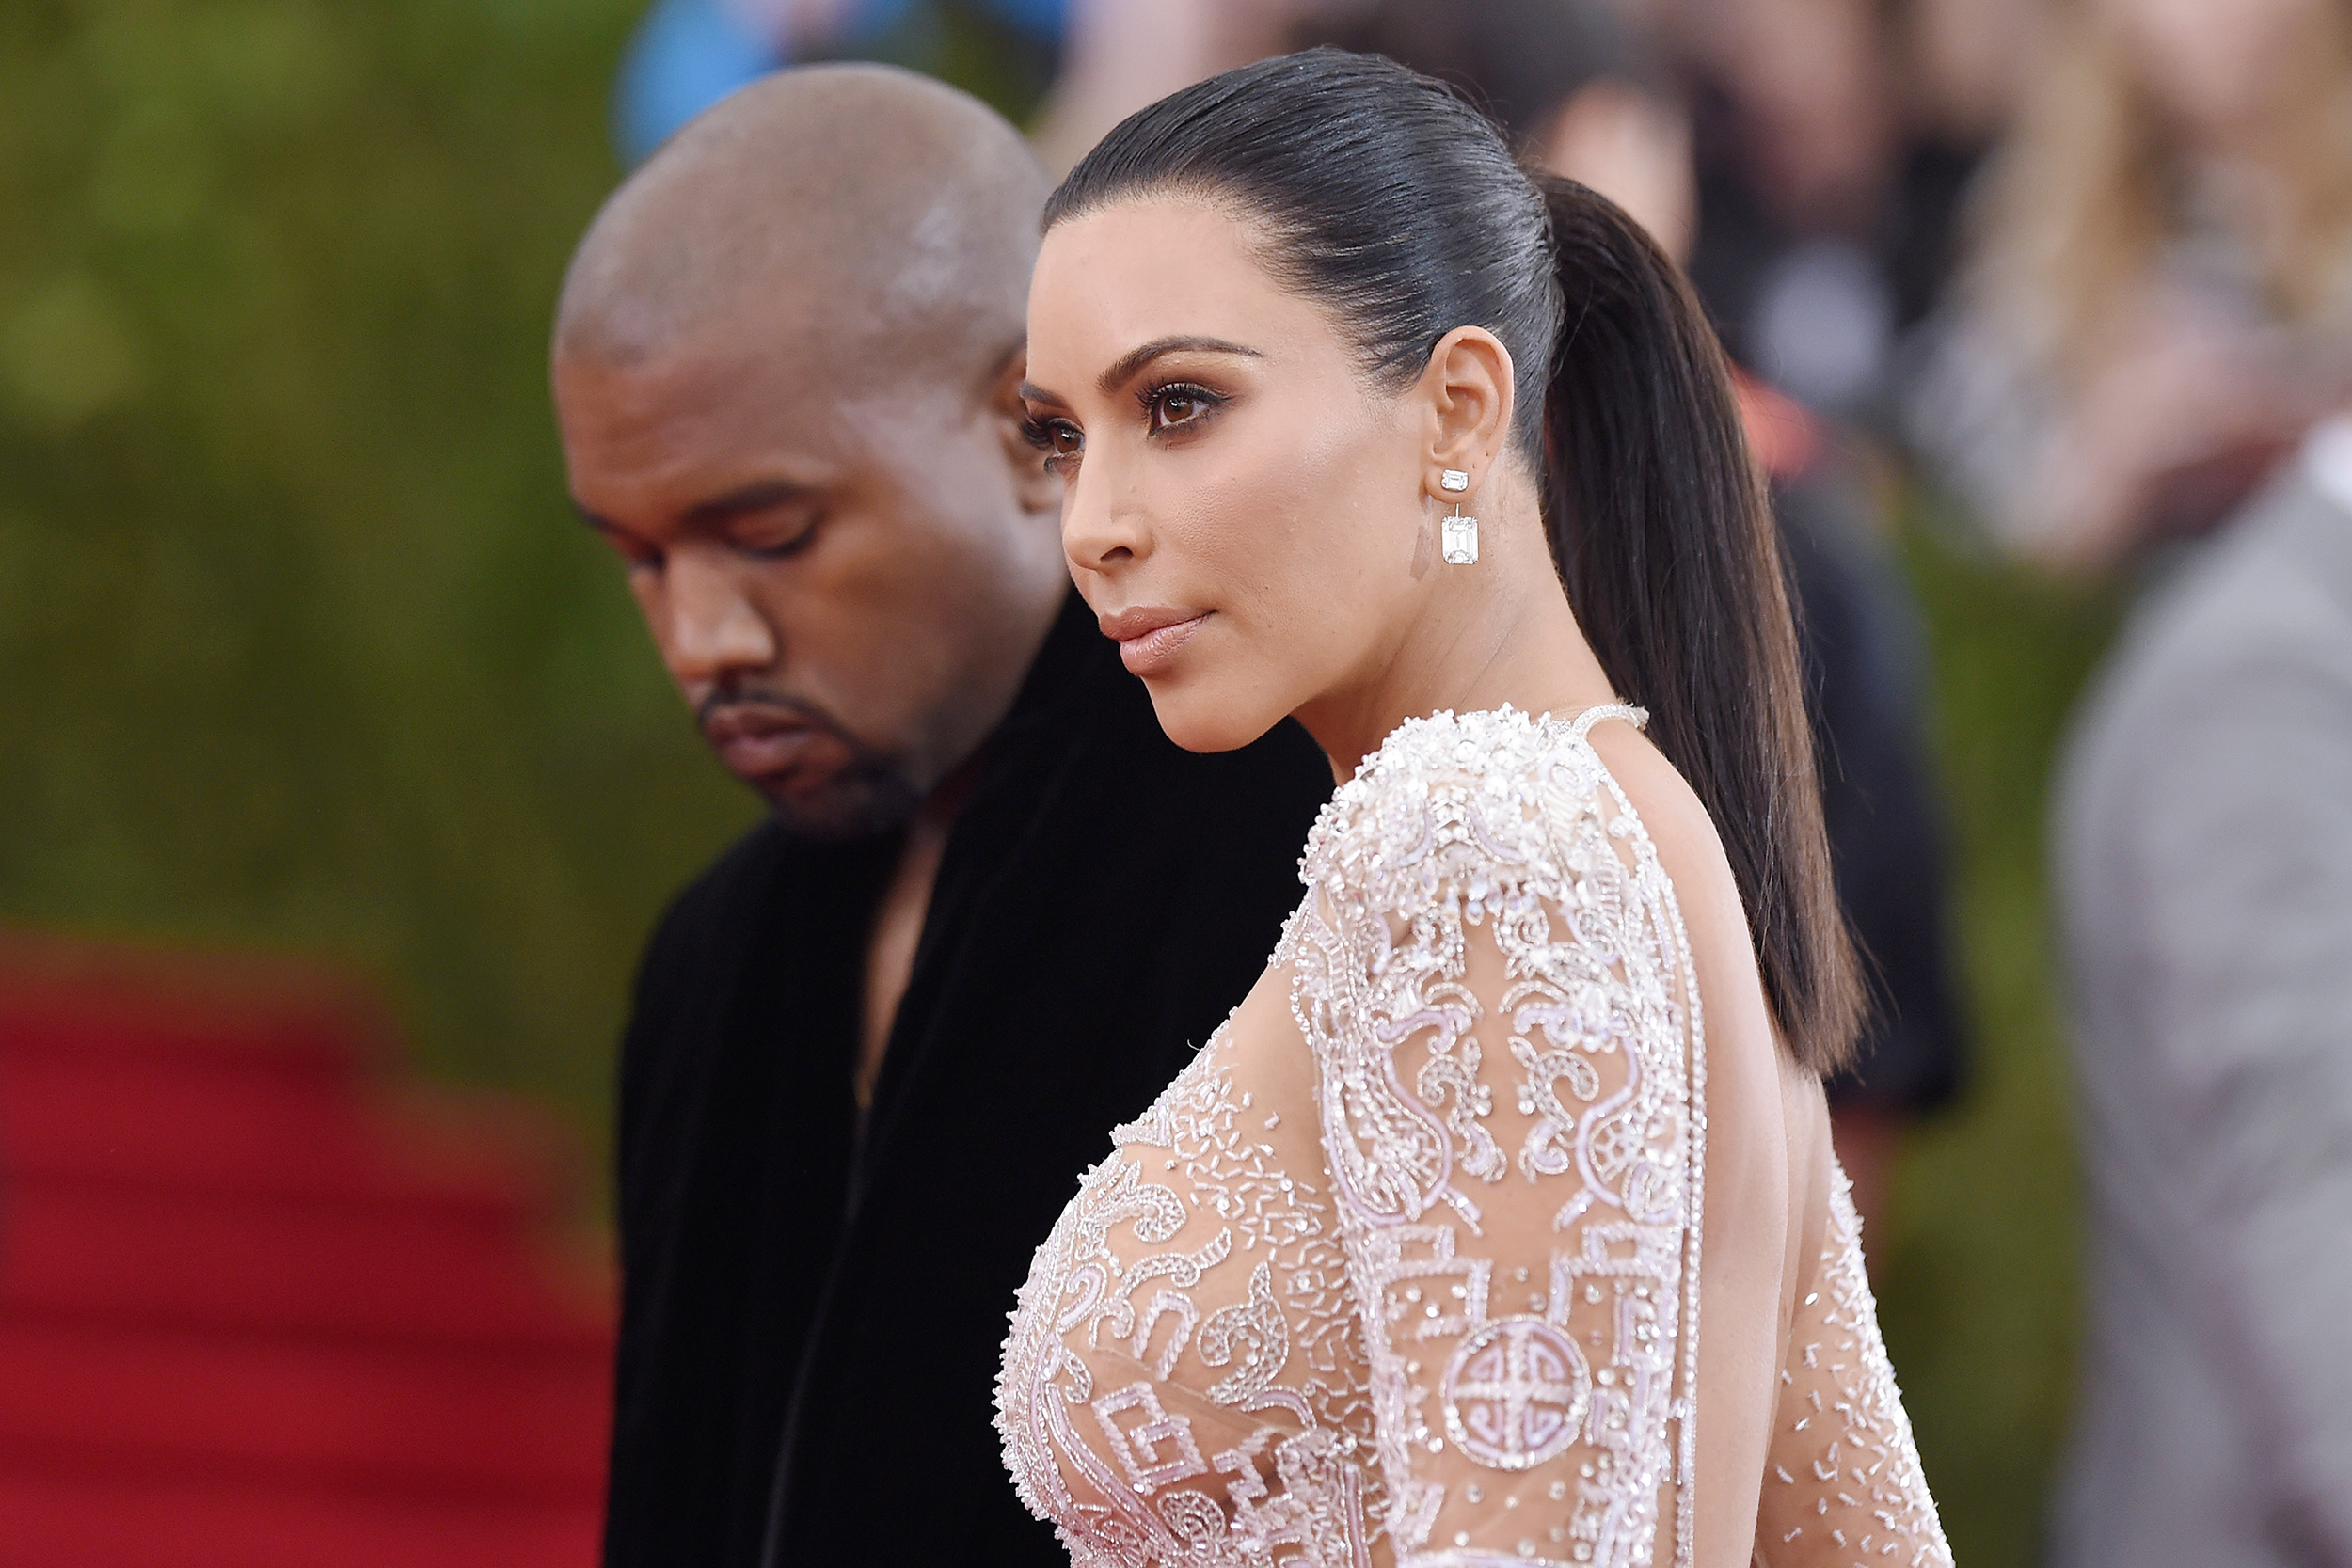 Kim Kardashian filed Divorce from Kanye West